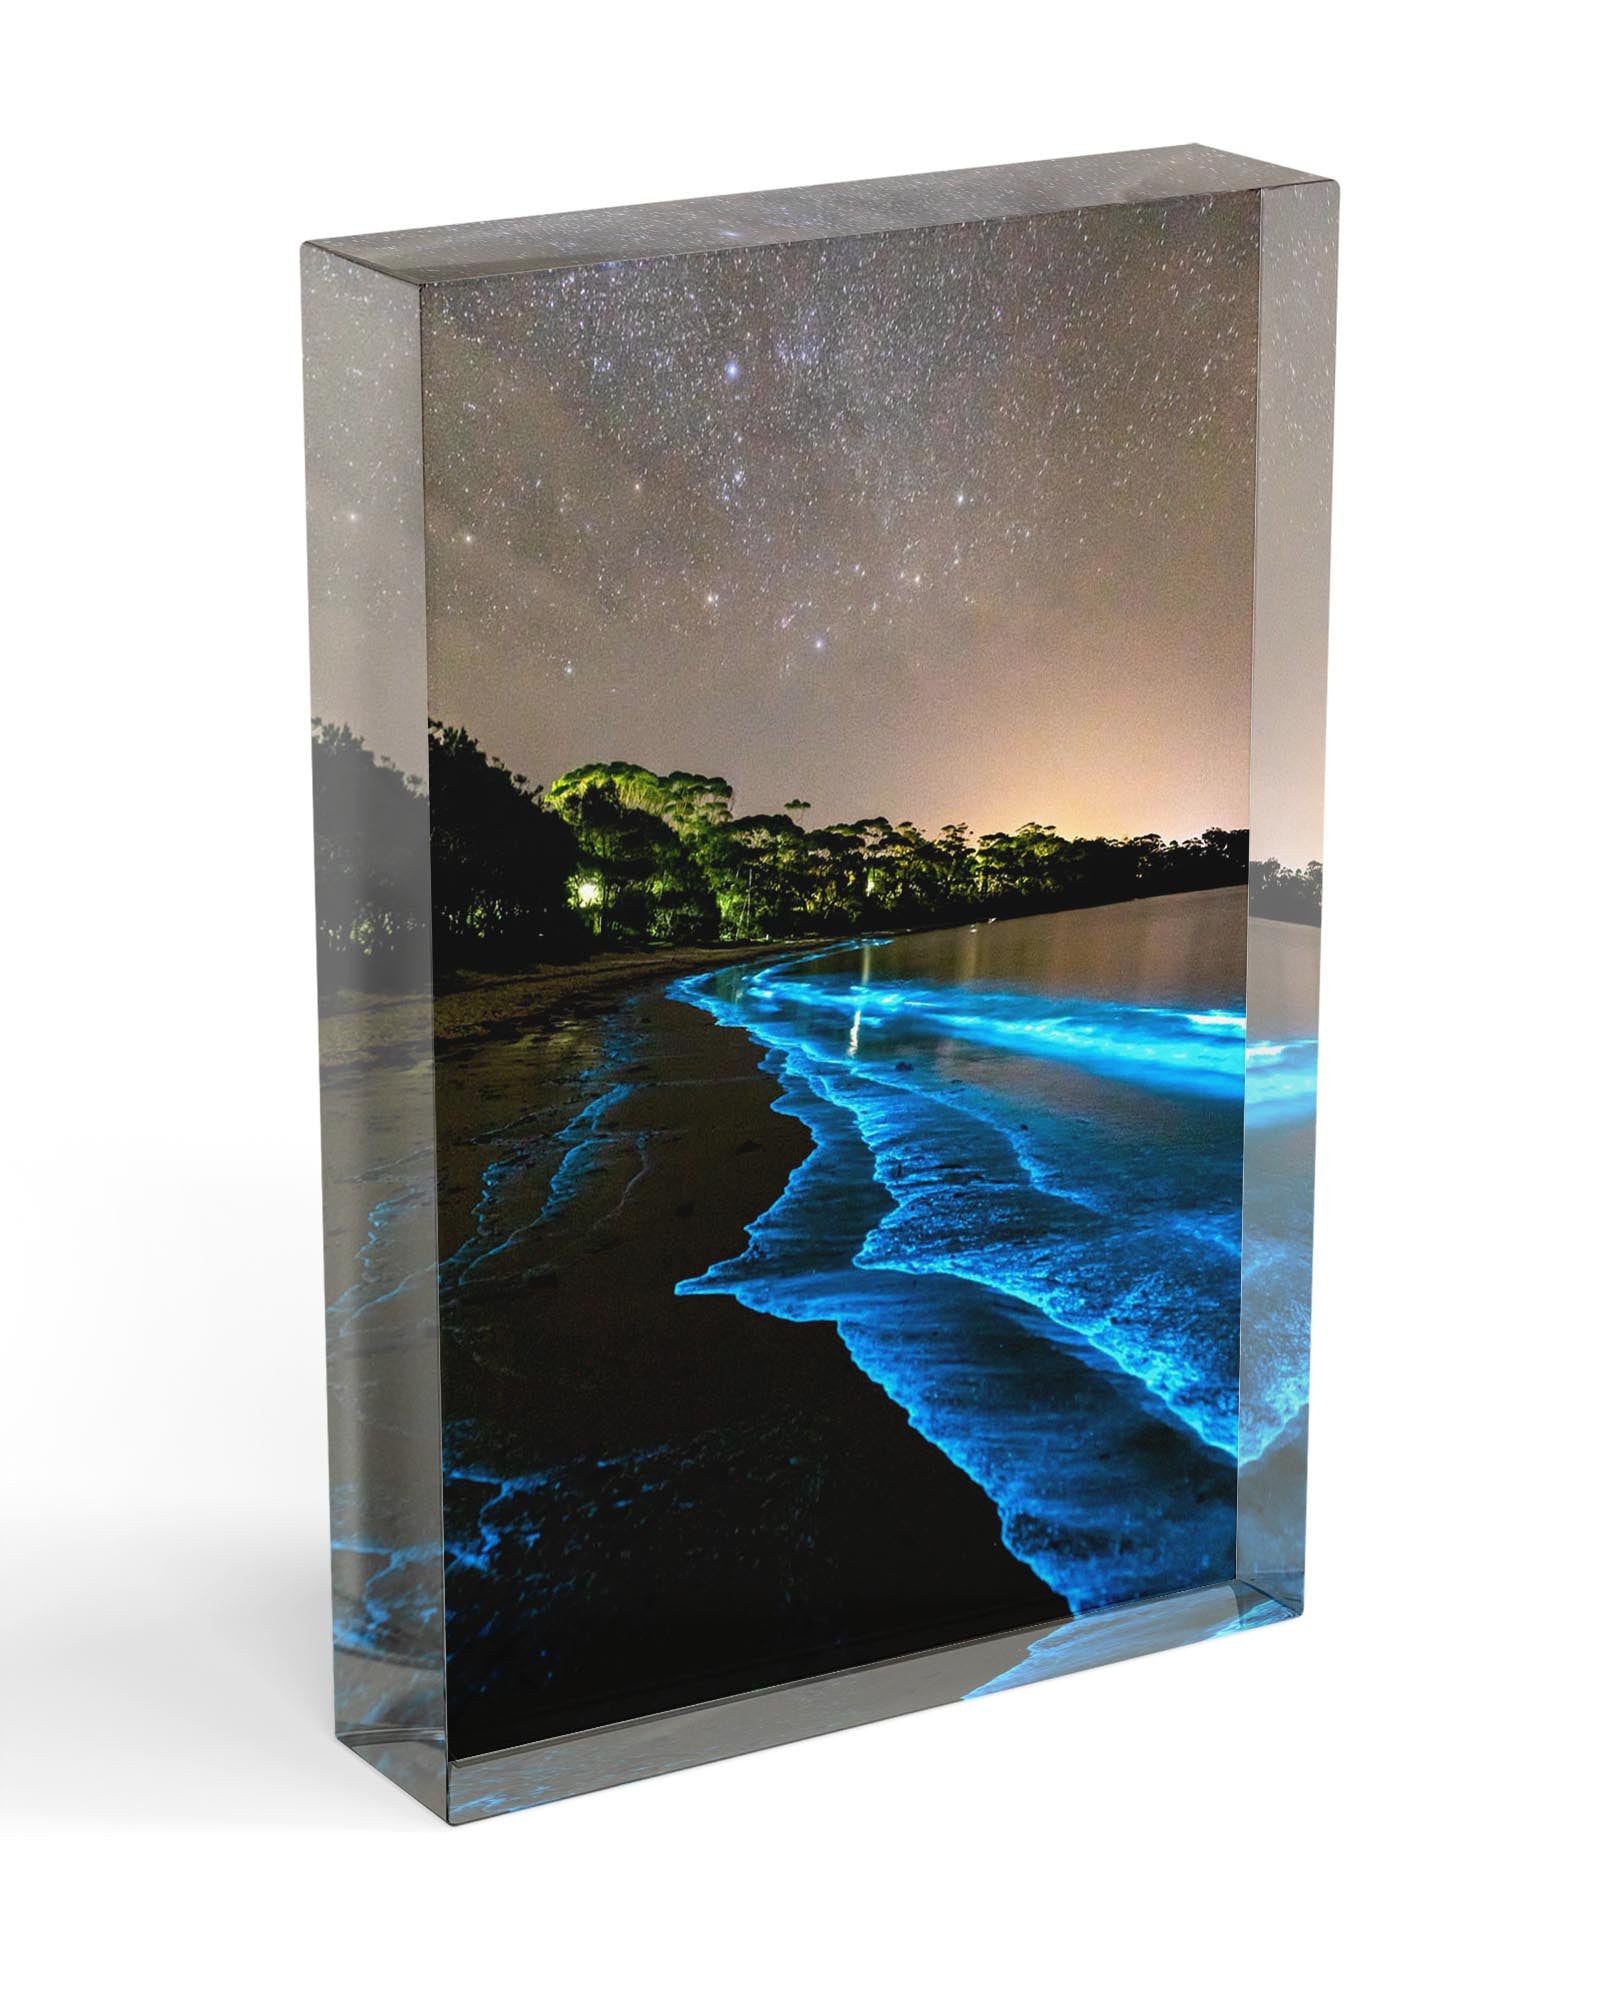 Bioluminescent waters | Vertical